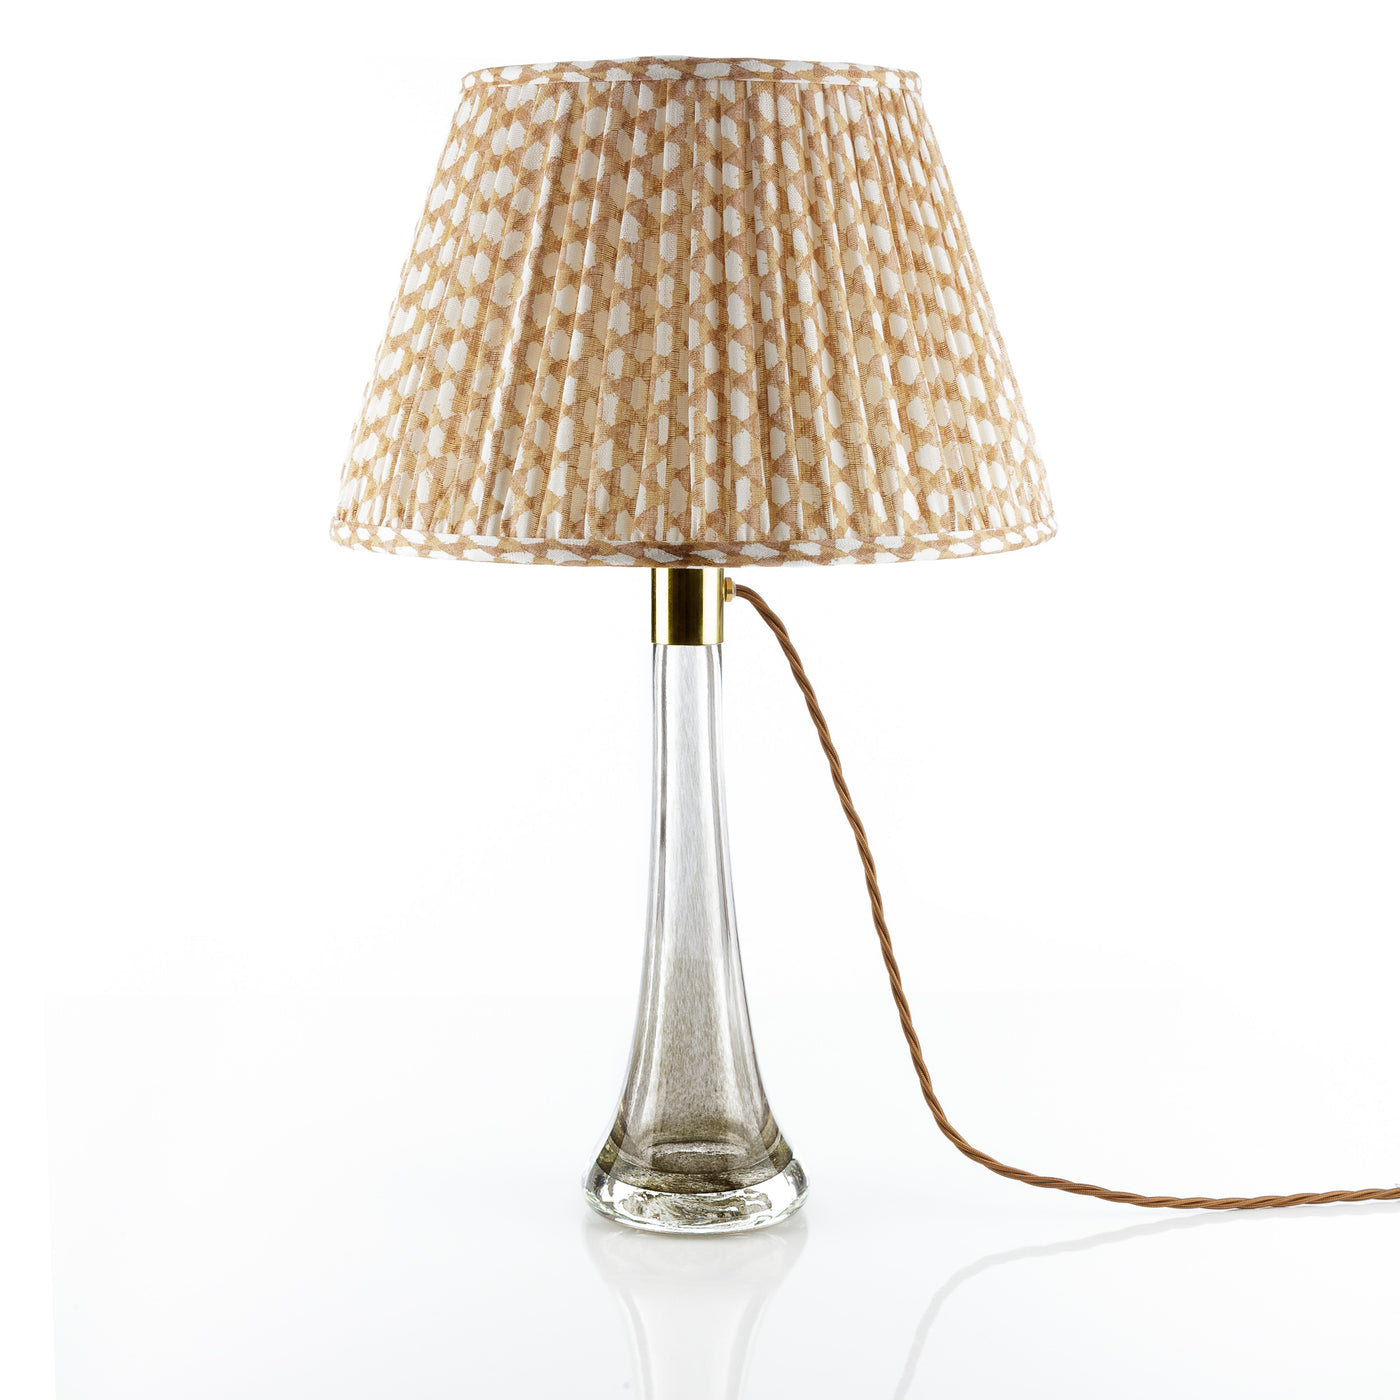 Fermoie Lampshade - Wicker in Nut Brown  | Newport Lamp And Shade | Located in Newport, RI